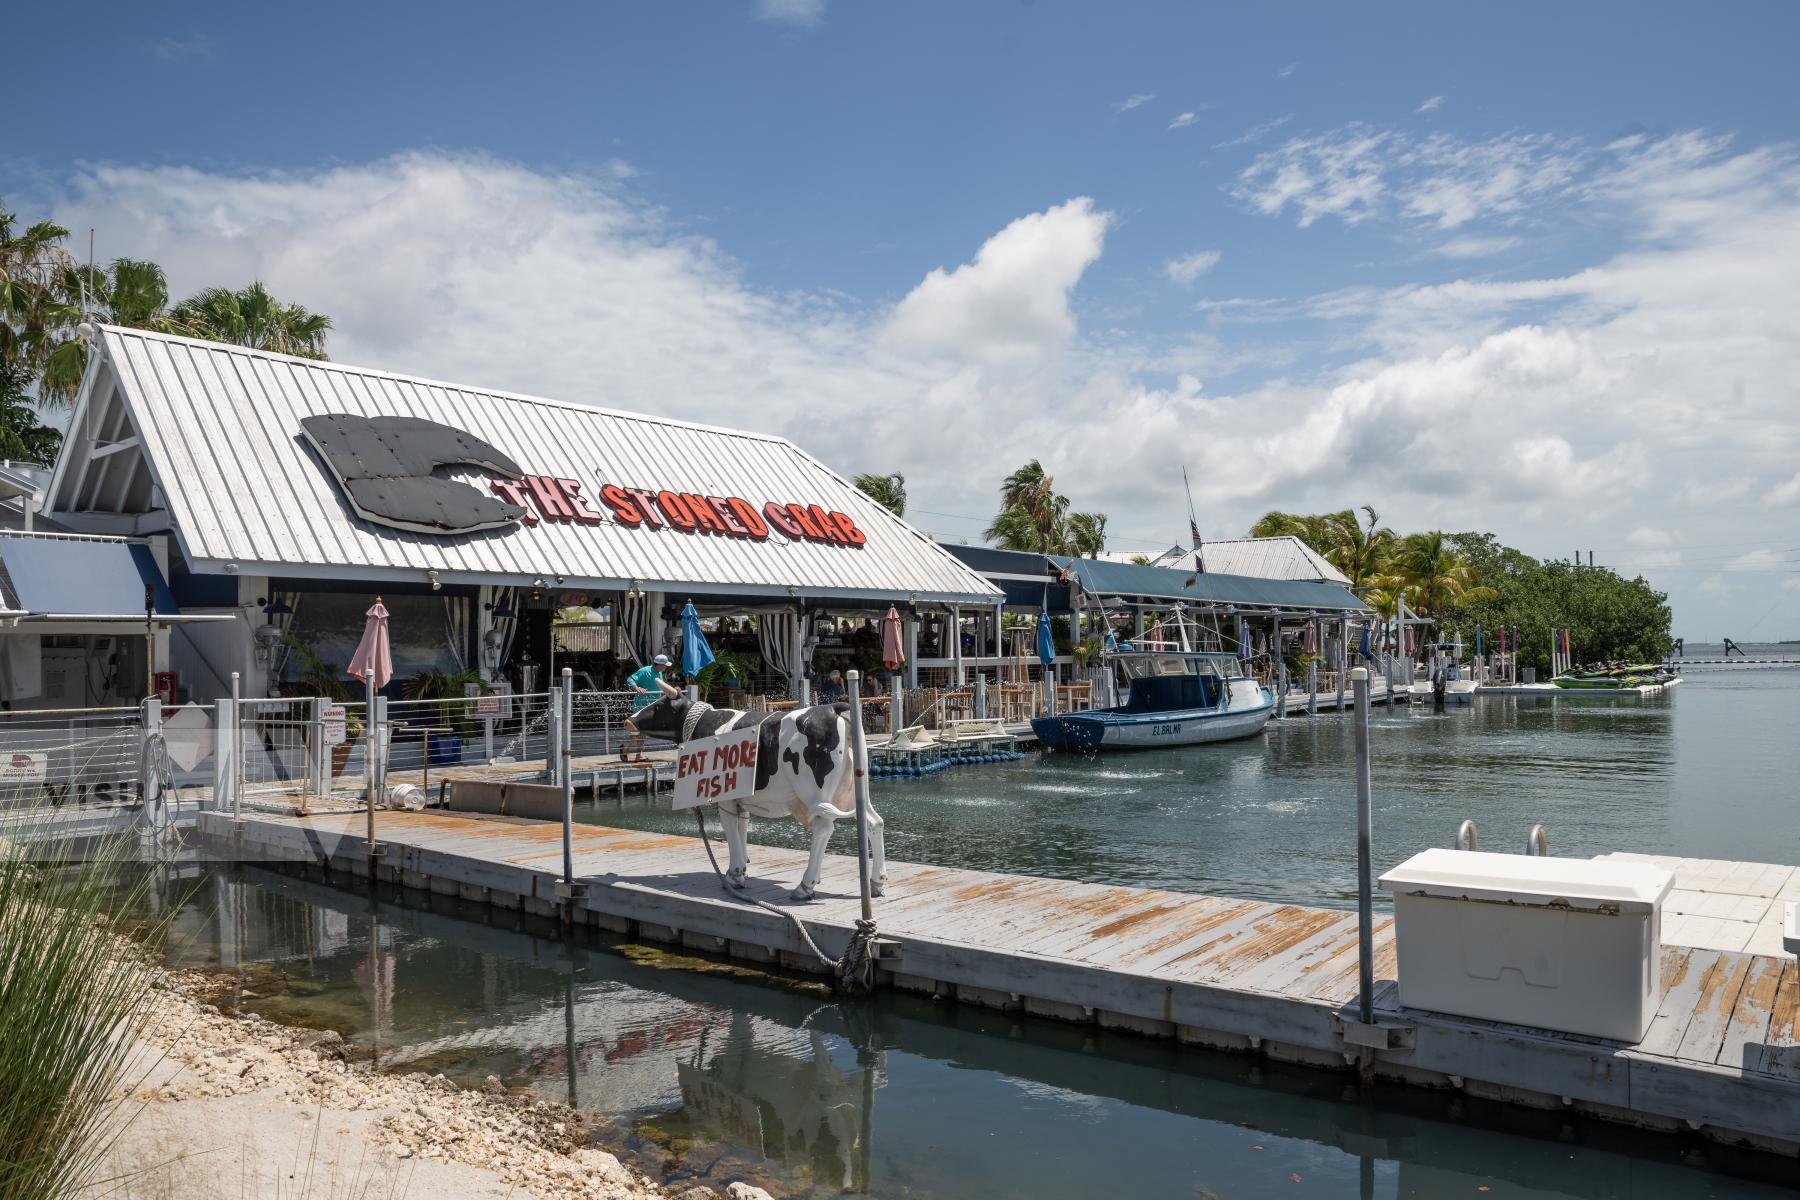 Purchase Ibis Bay Beach Resort, Key West by Silvia Ros